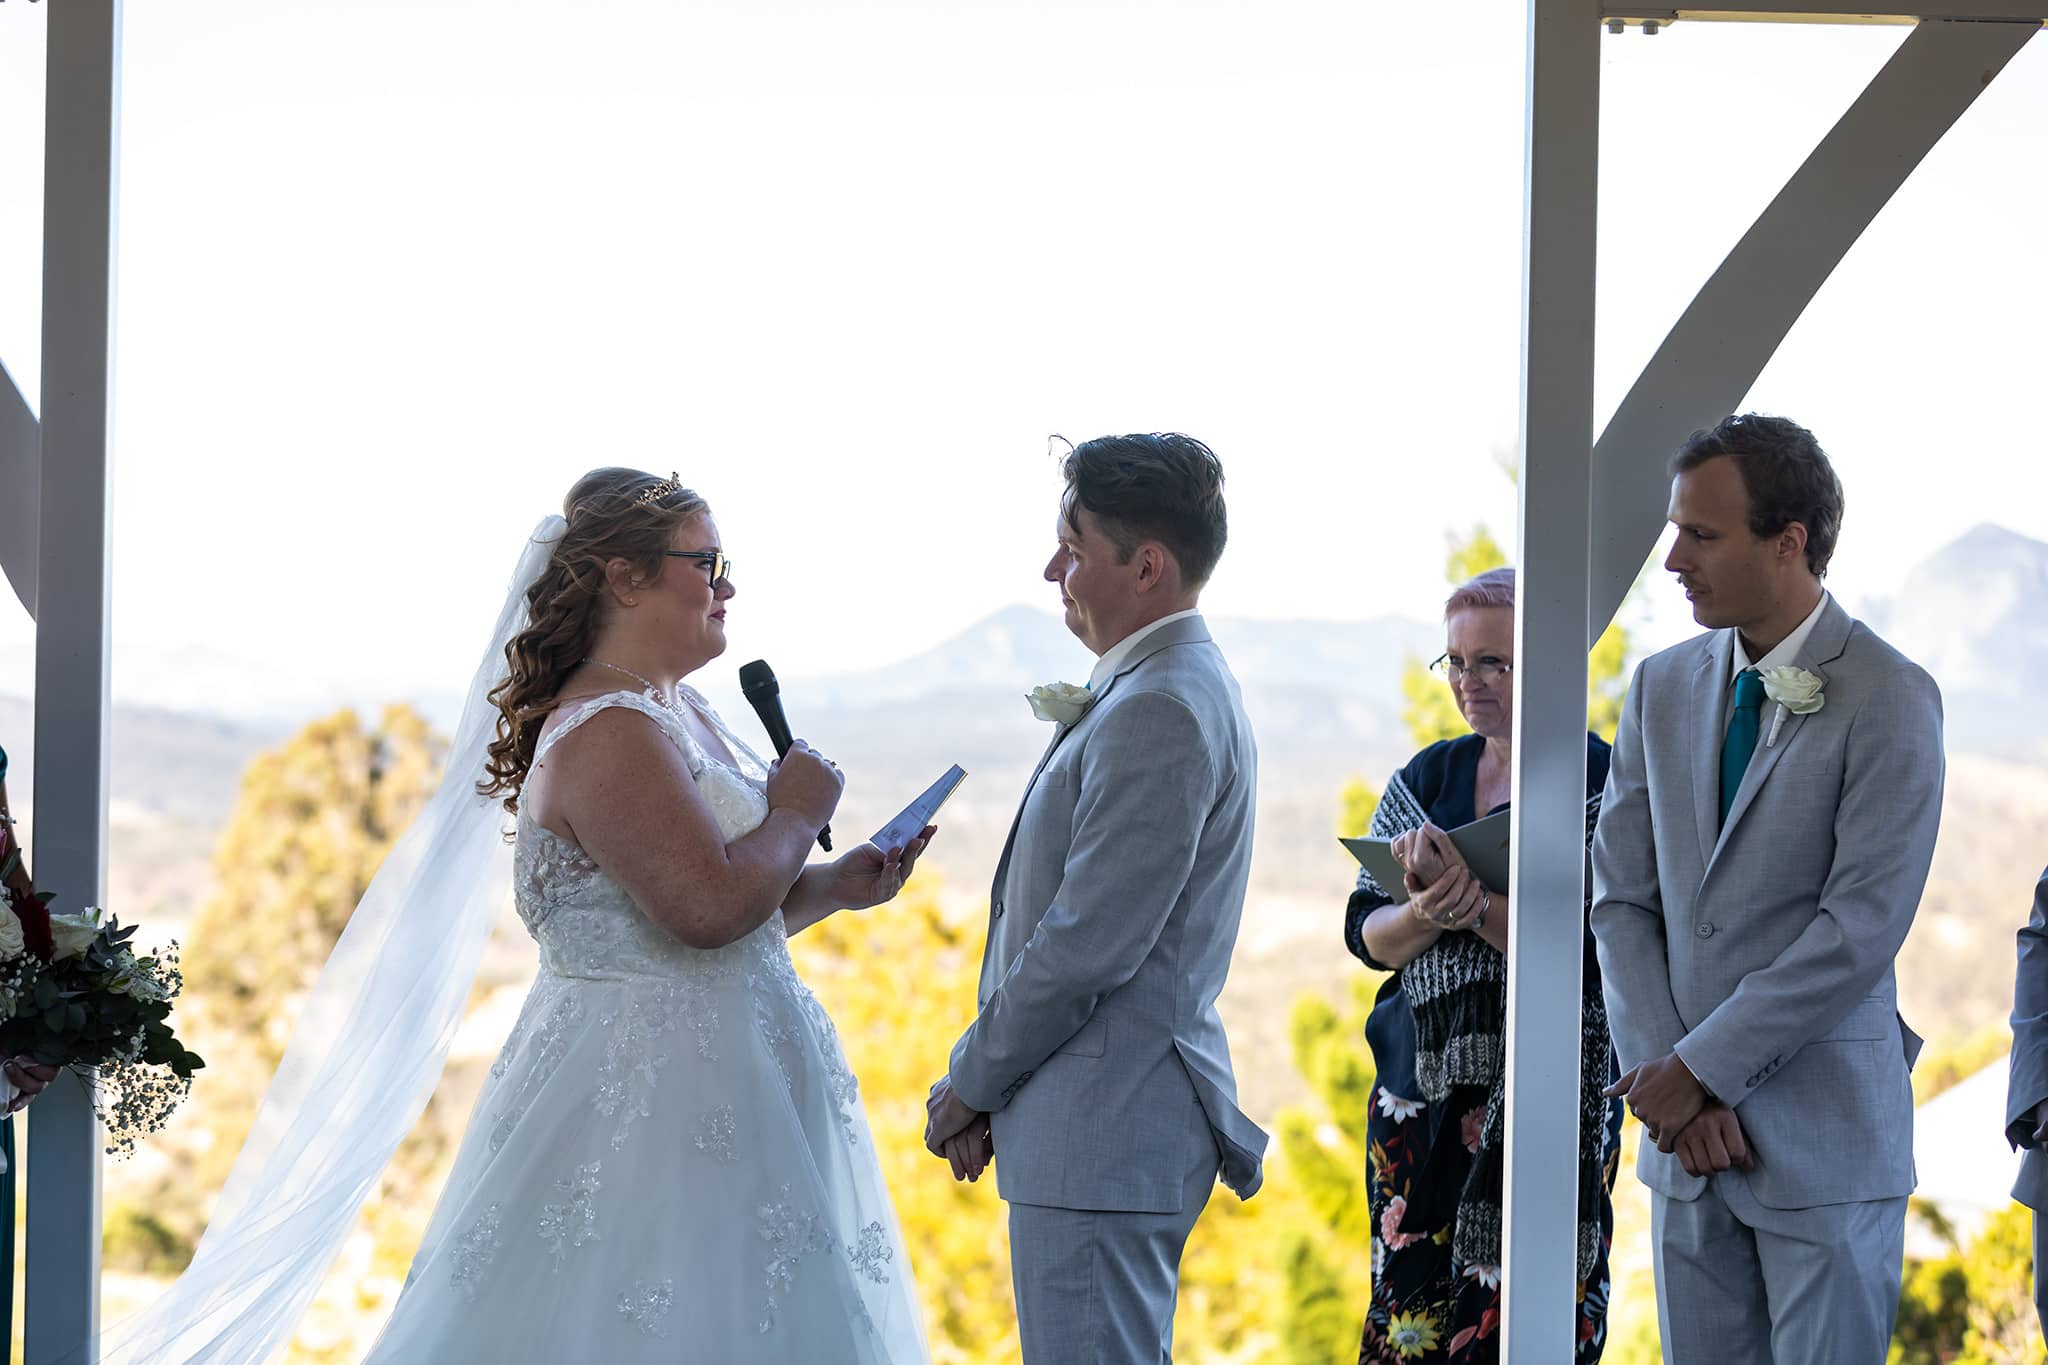 Wedding ceremony at Laurenvale Estate in Aratula, Scenic Rim, by Mooi Photography.